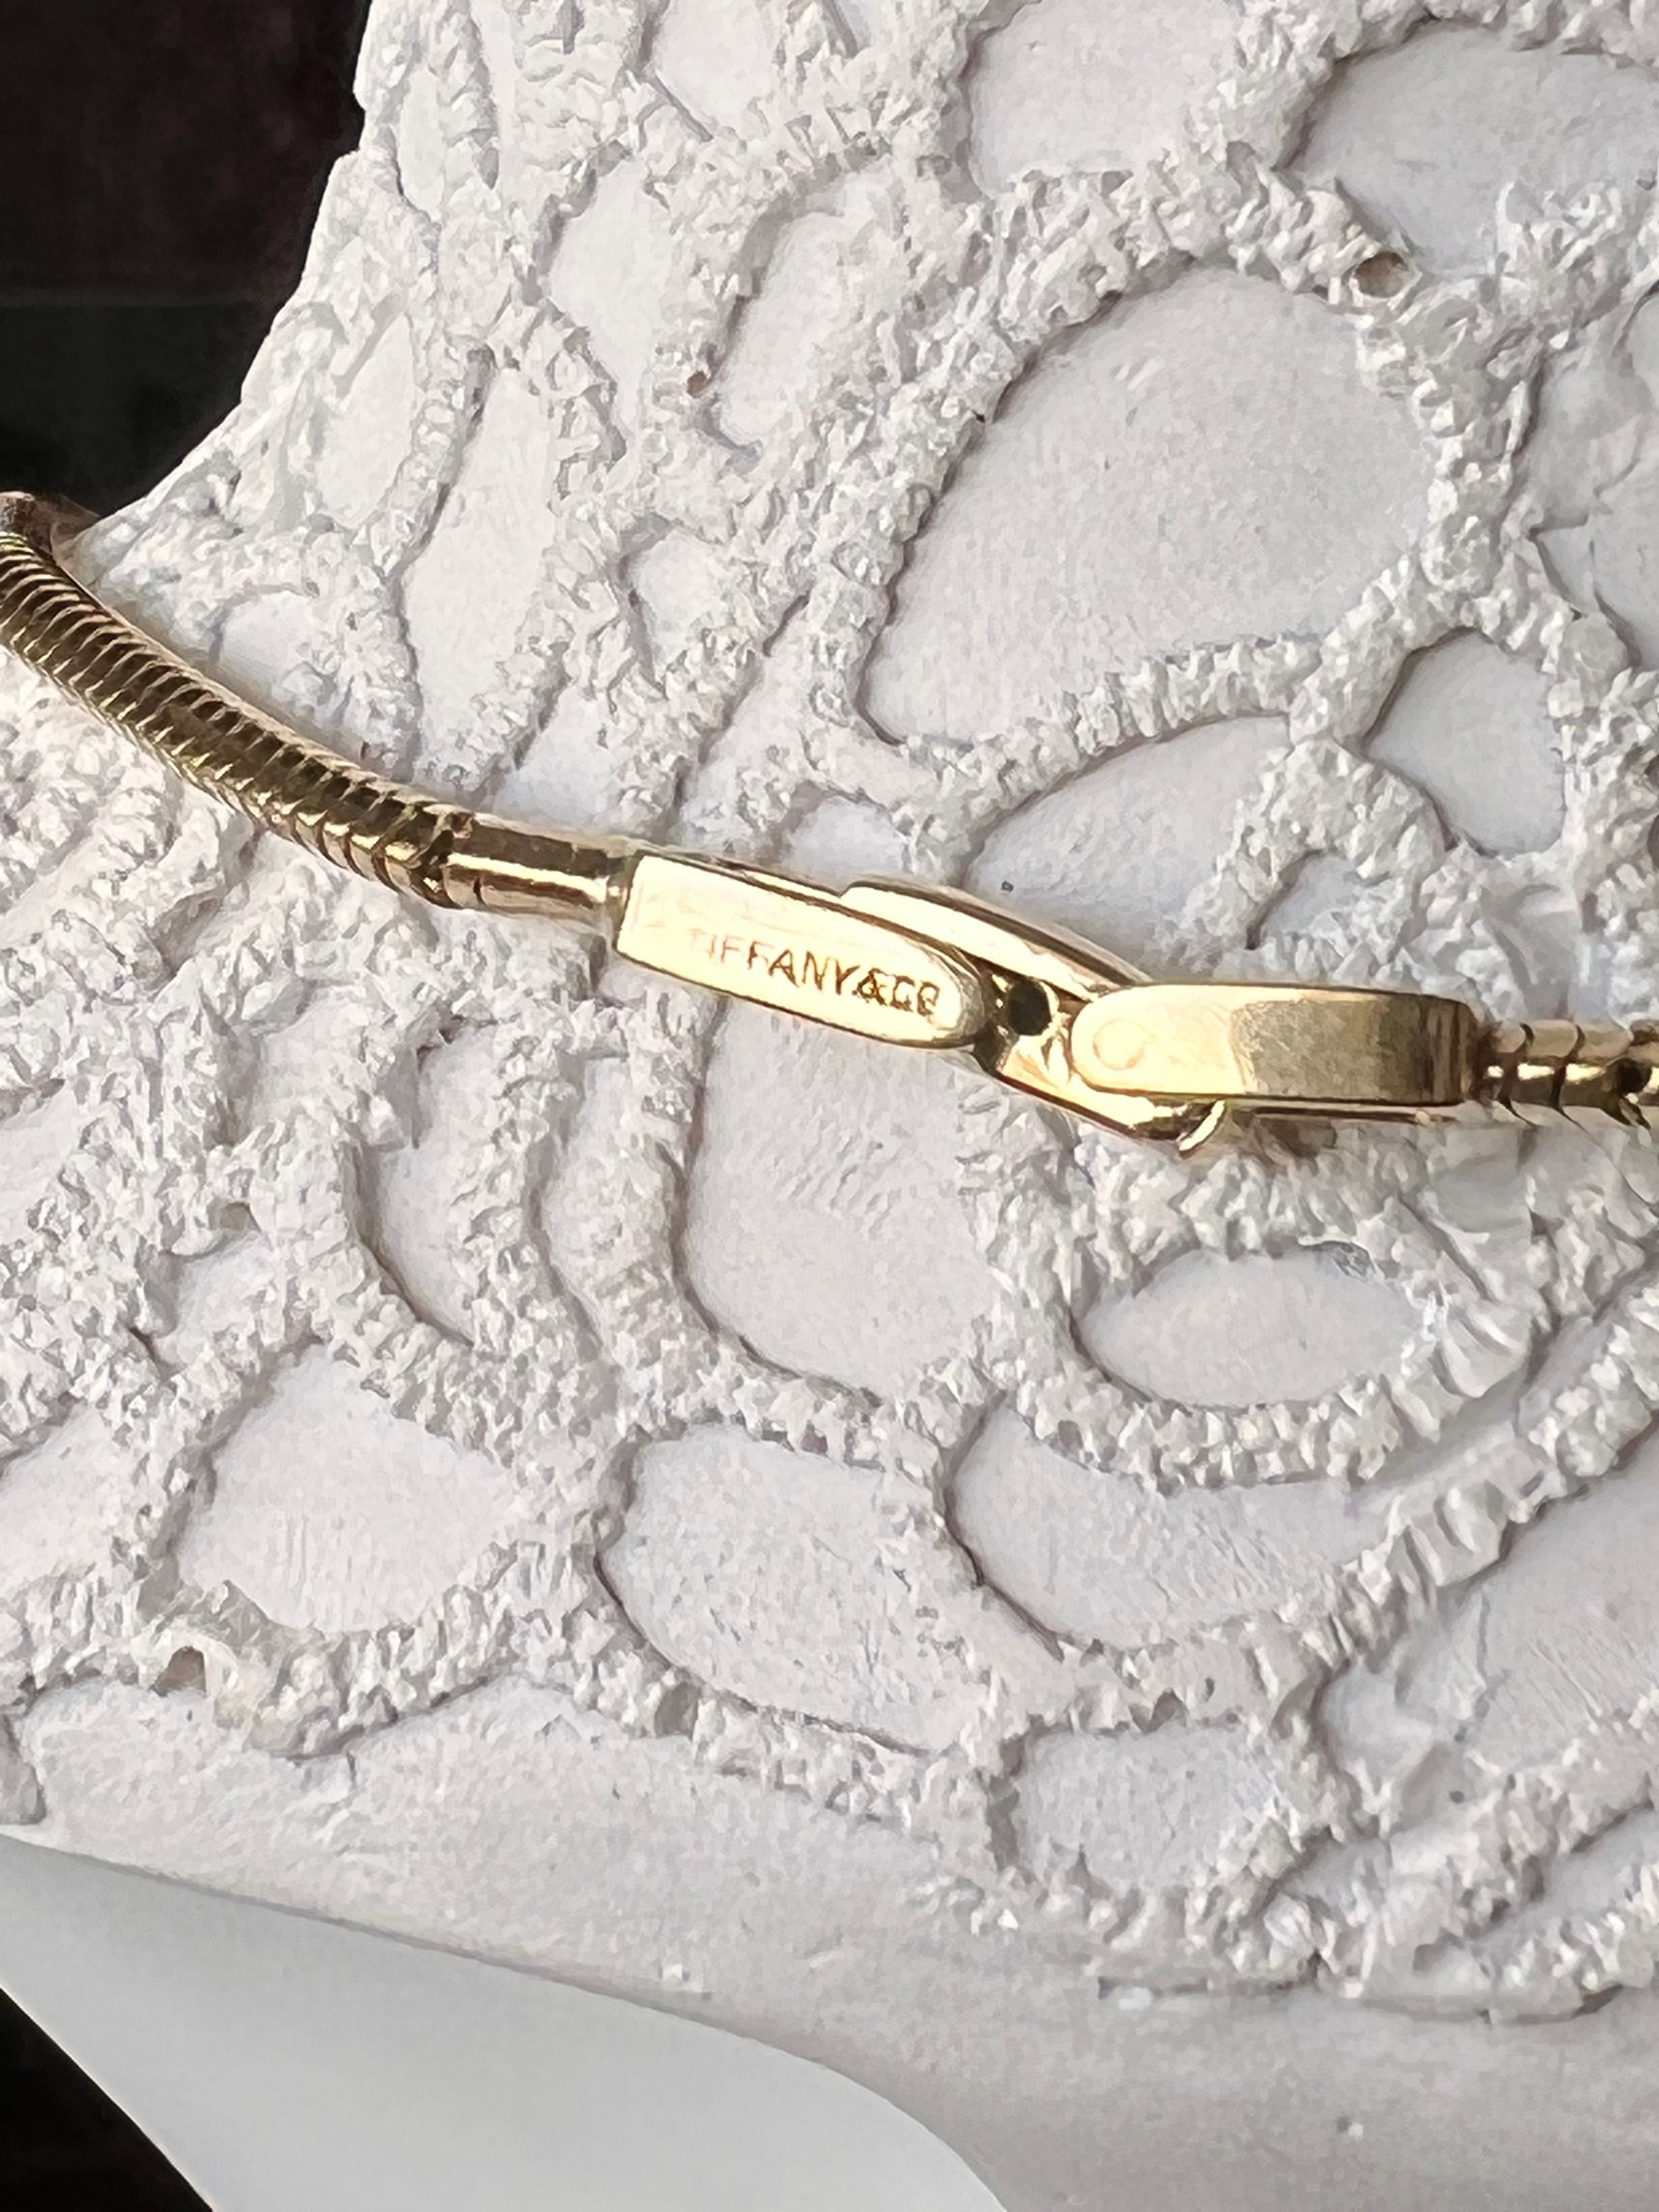 Tiffany & Co. 1940's Retro 14 Karat Yellow Gold Vintage Snake Chain Necklace